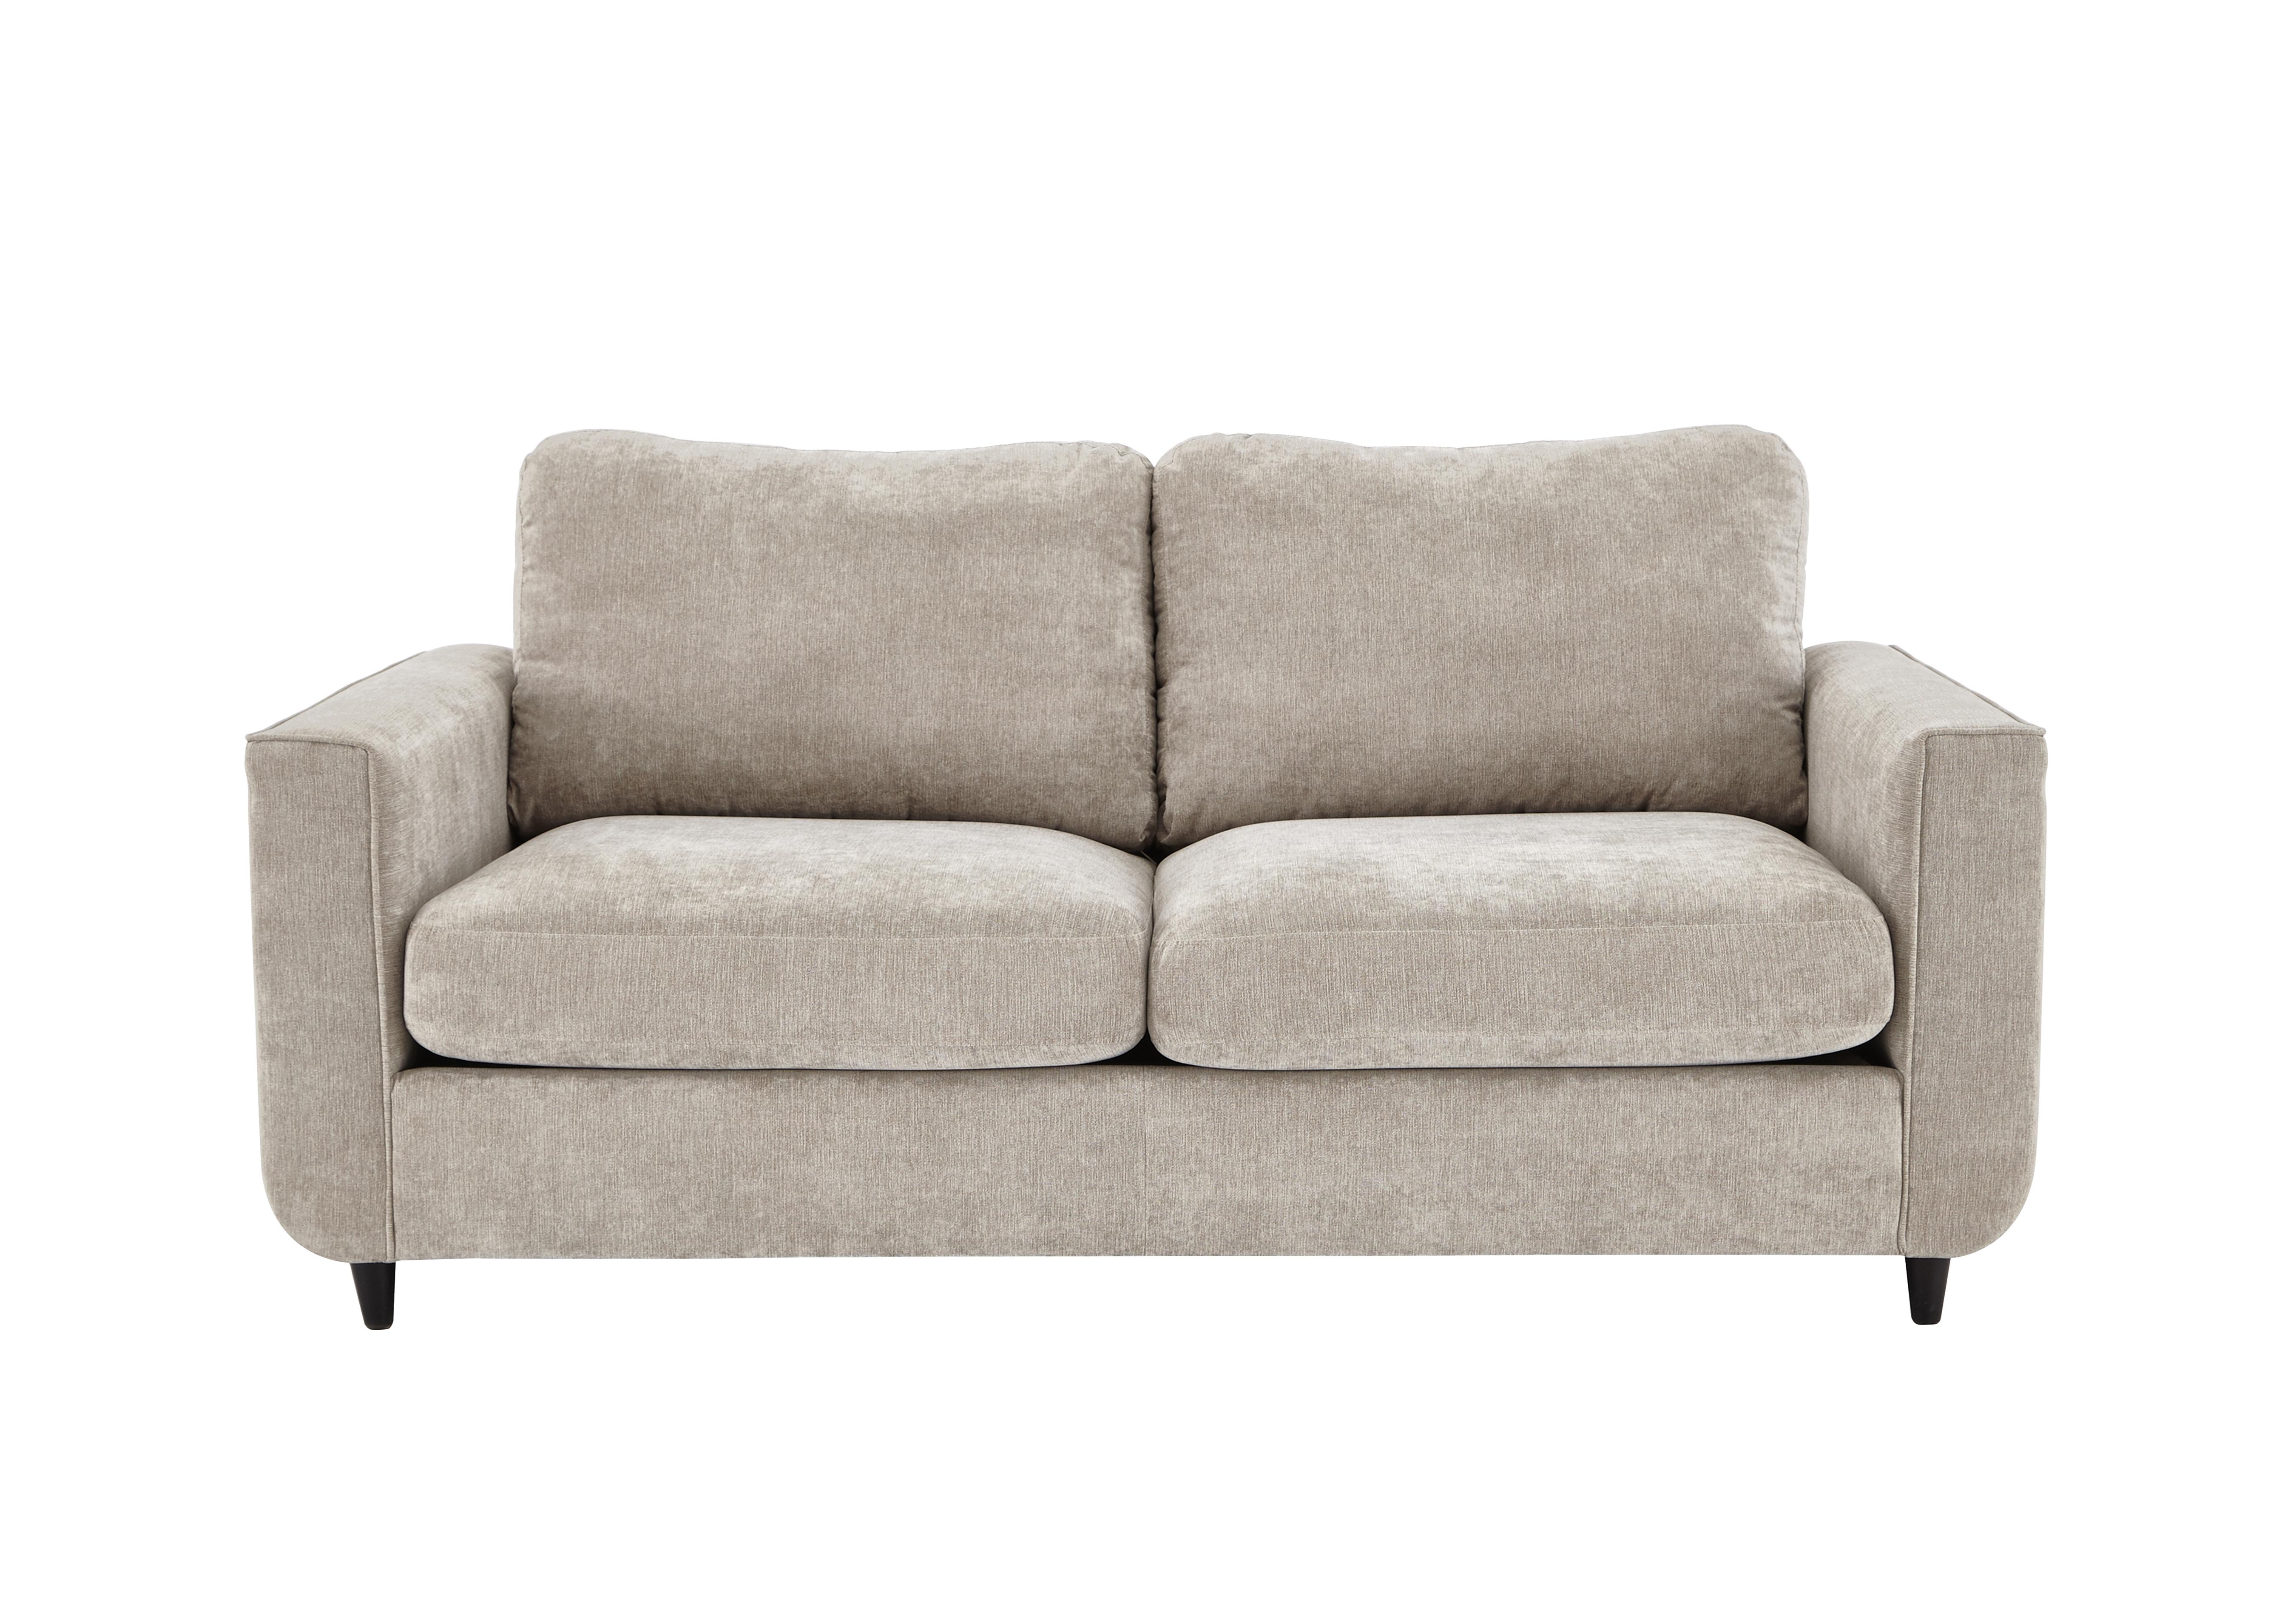 Esprit 3 Seater Fabric Sofa in Silver Ebony Feet on Furniture Village